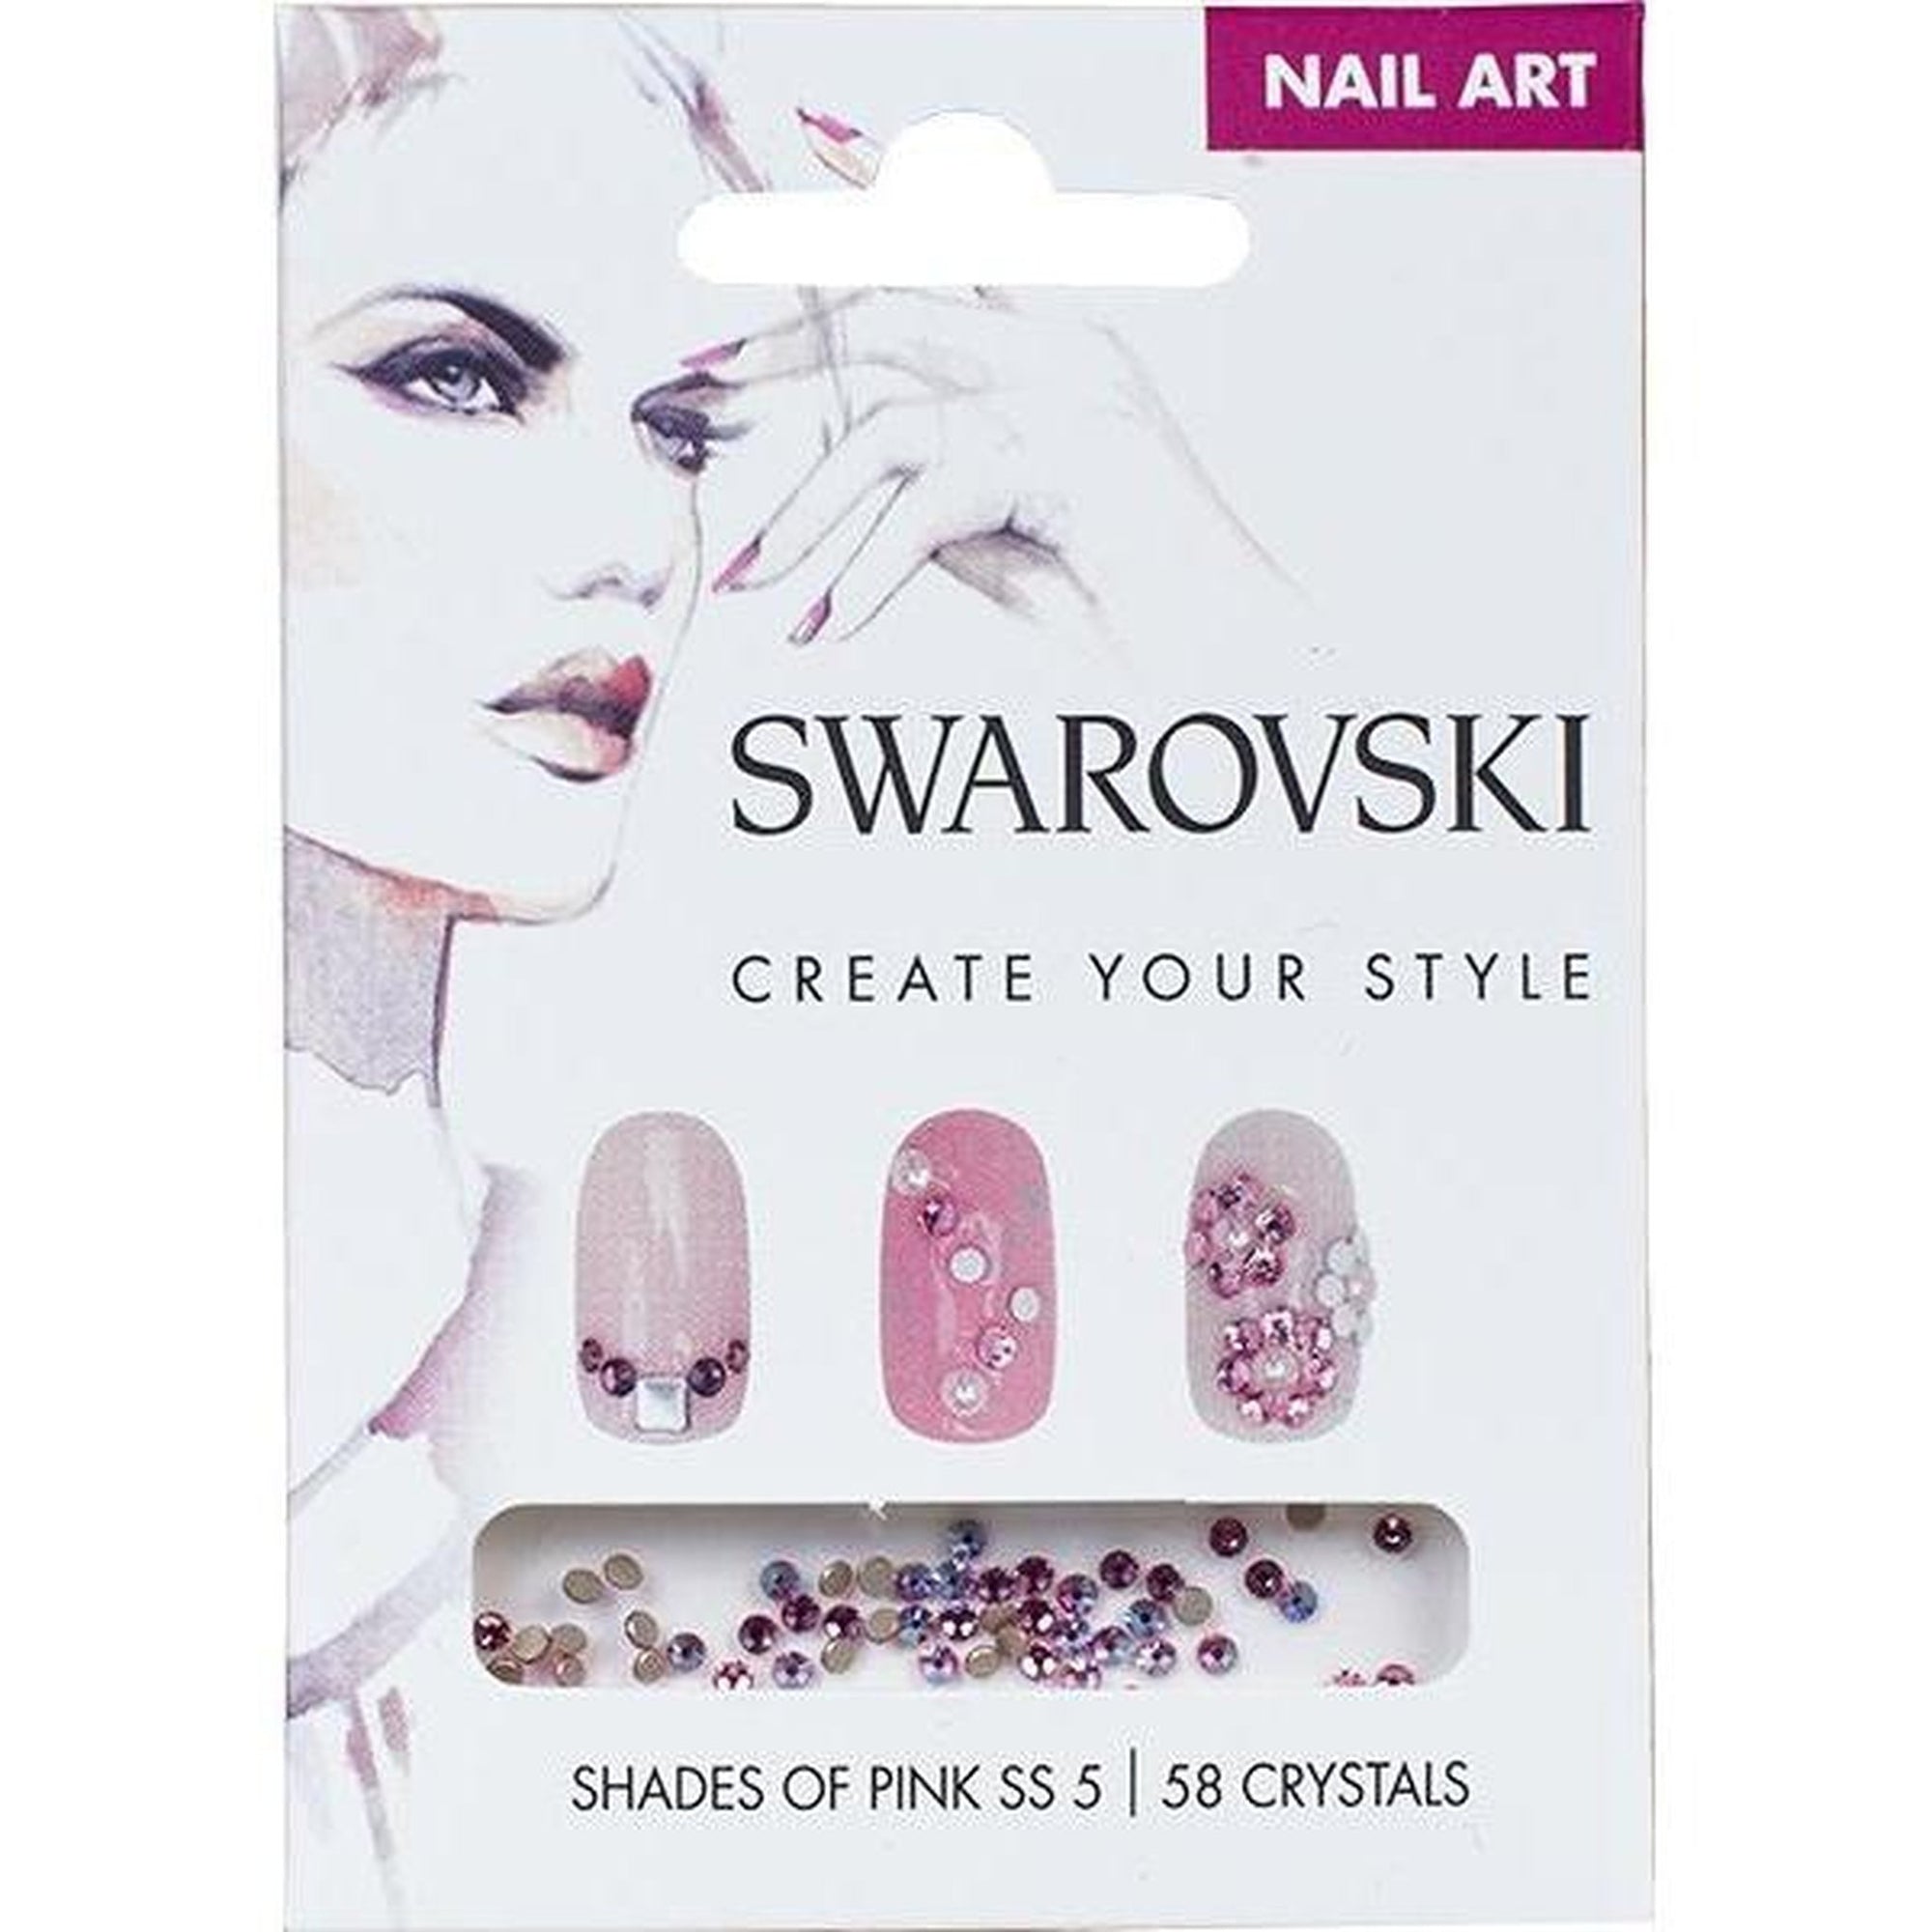 swarovski nail art loose crystals pink ss5 swarovski retail